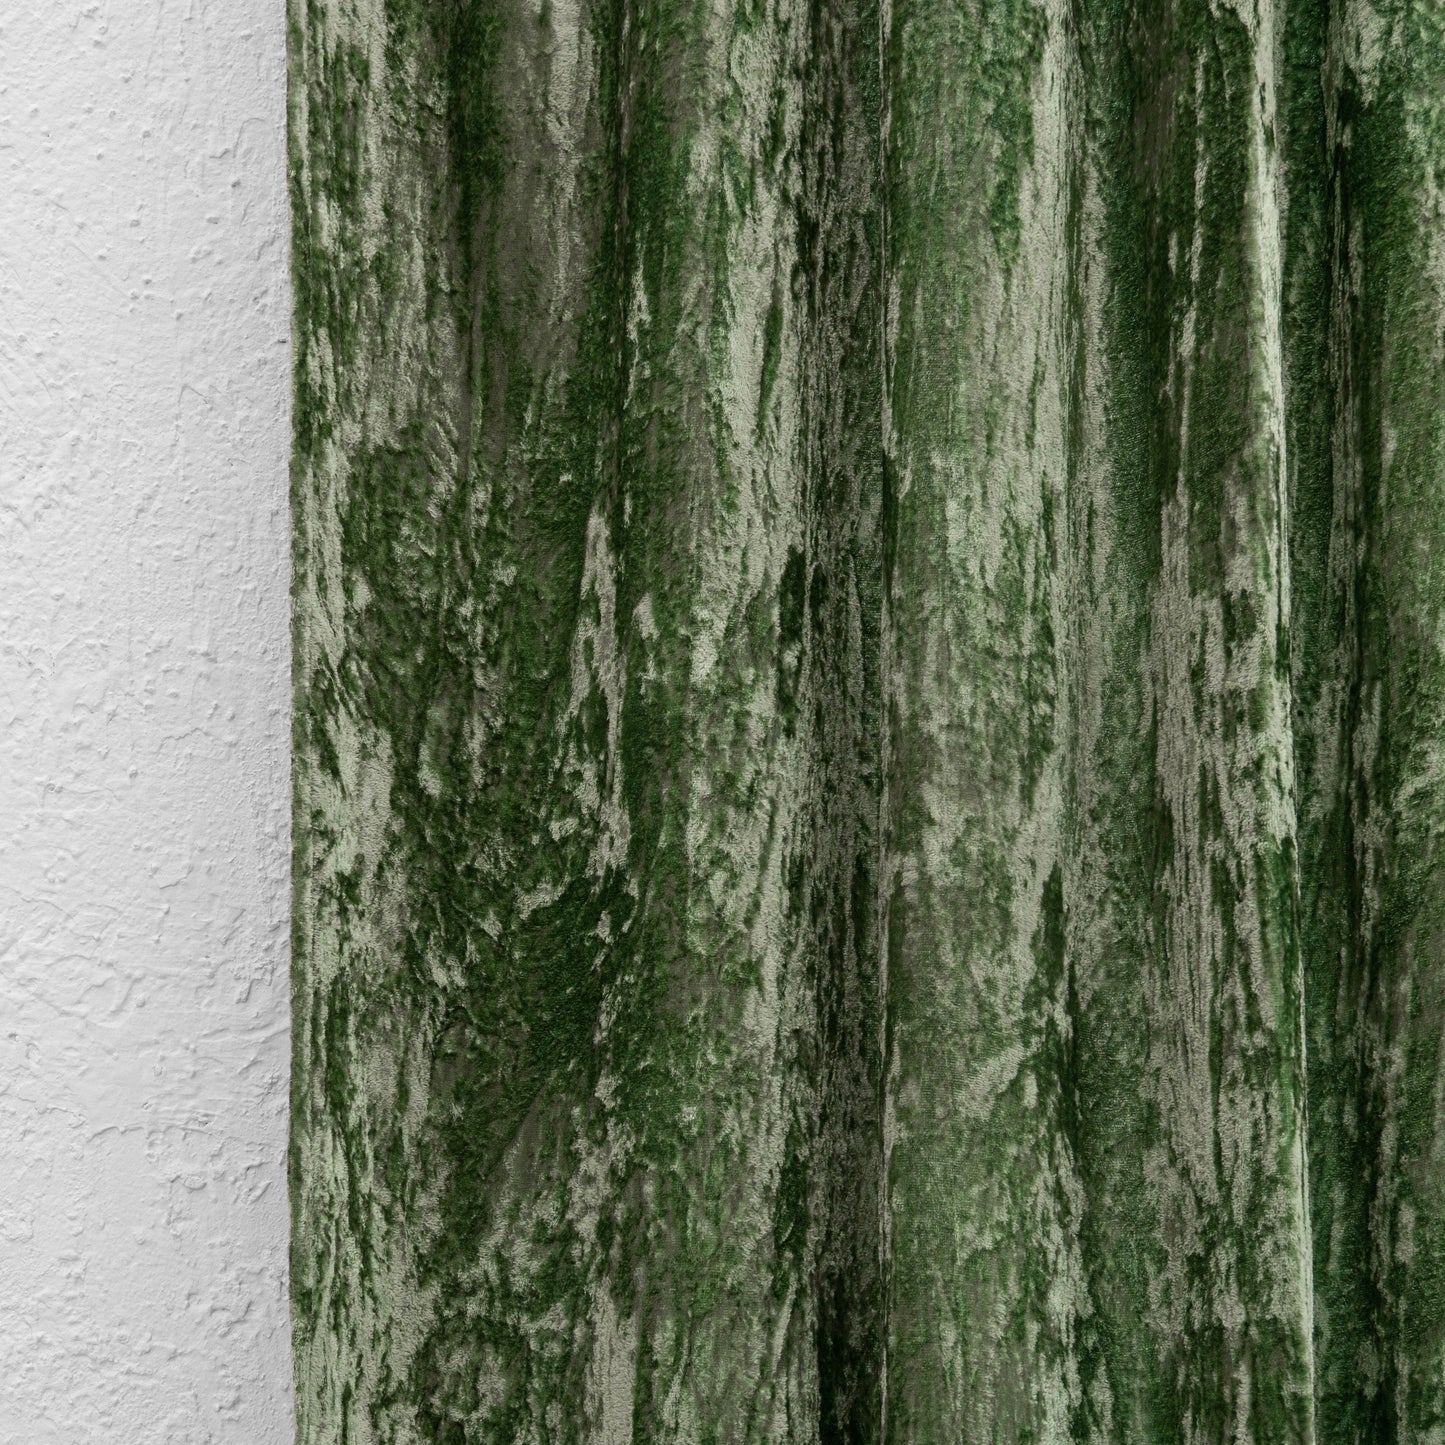 Sage Green Velvet Curtain - Set of 2 - I